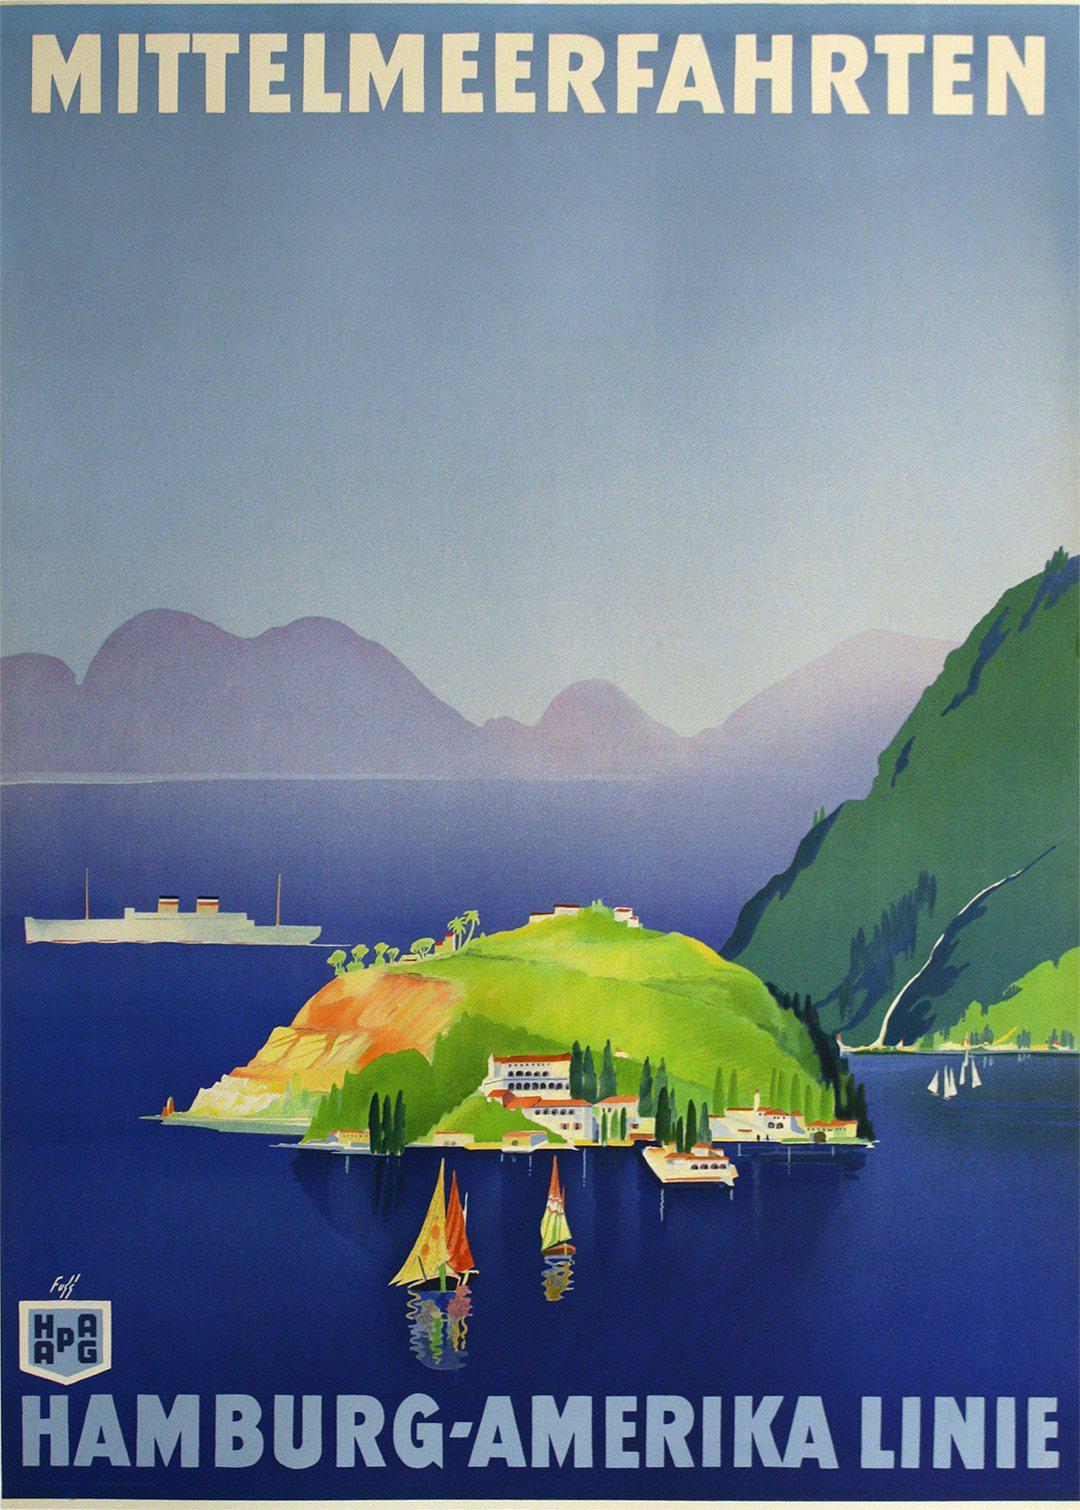 Original Vintage Hamburg Amerika Mittelmeerfahrten Sailboat Poster by Albert Fuss c1935 Hapag